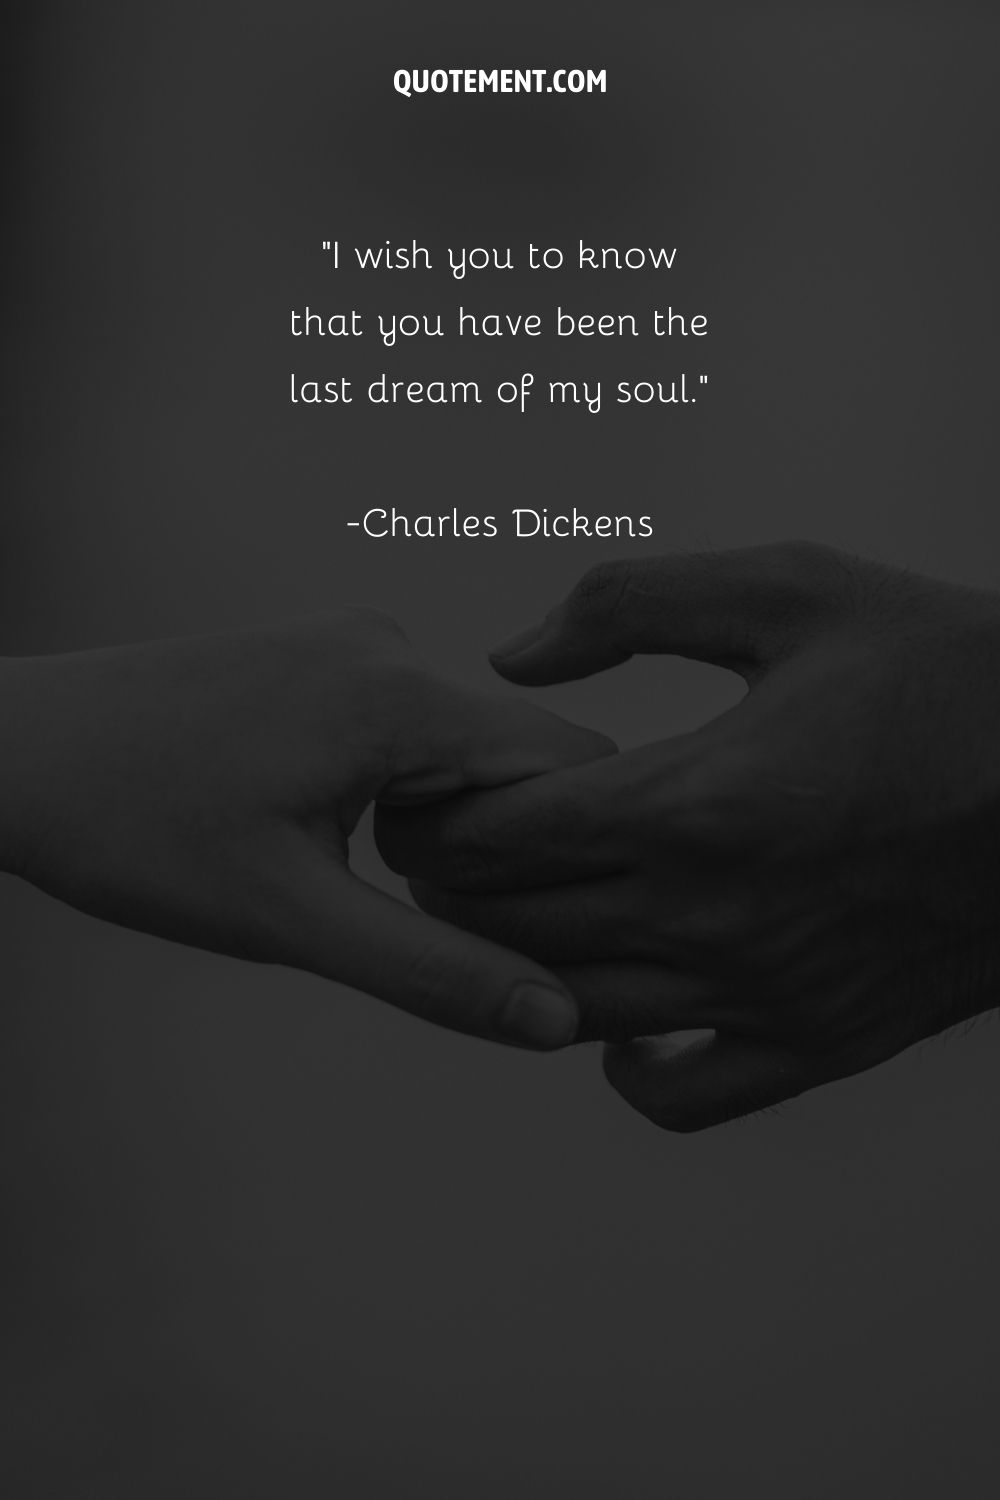 Monochrome hands interlocked representing Charles Dickens quote
